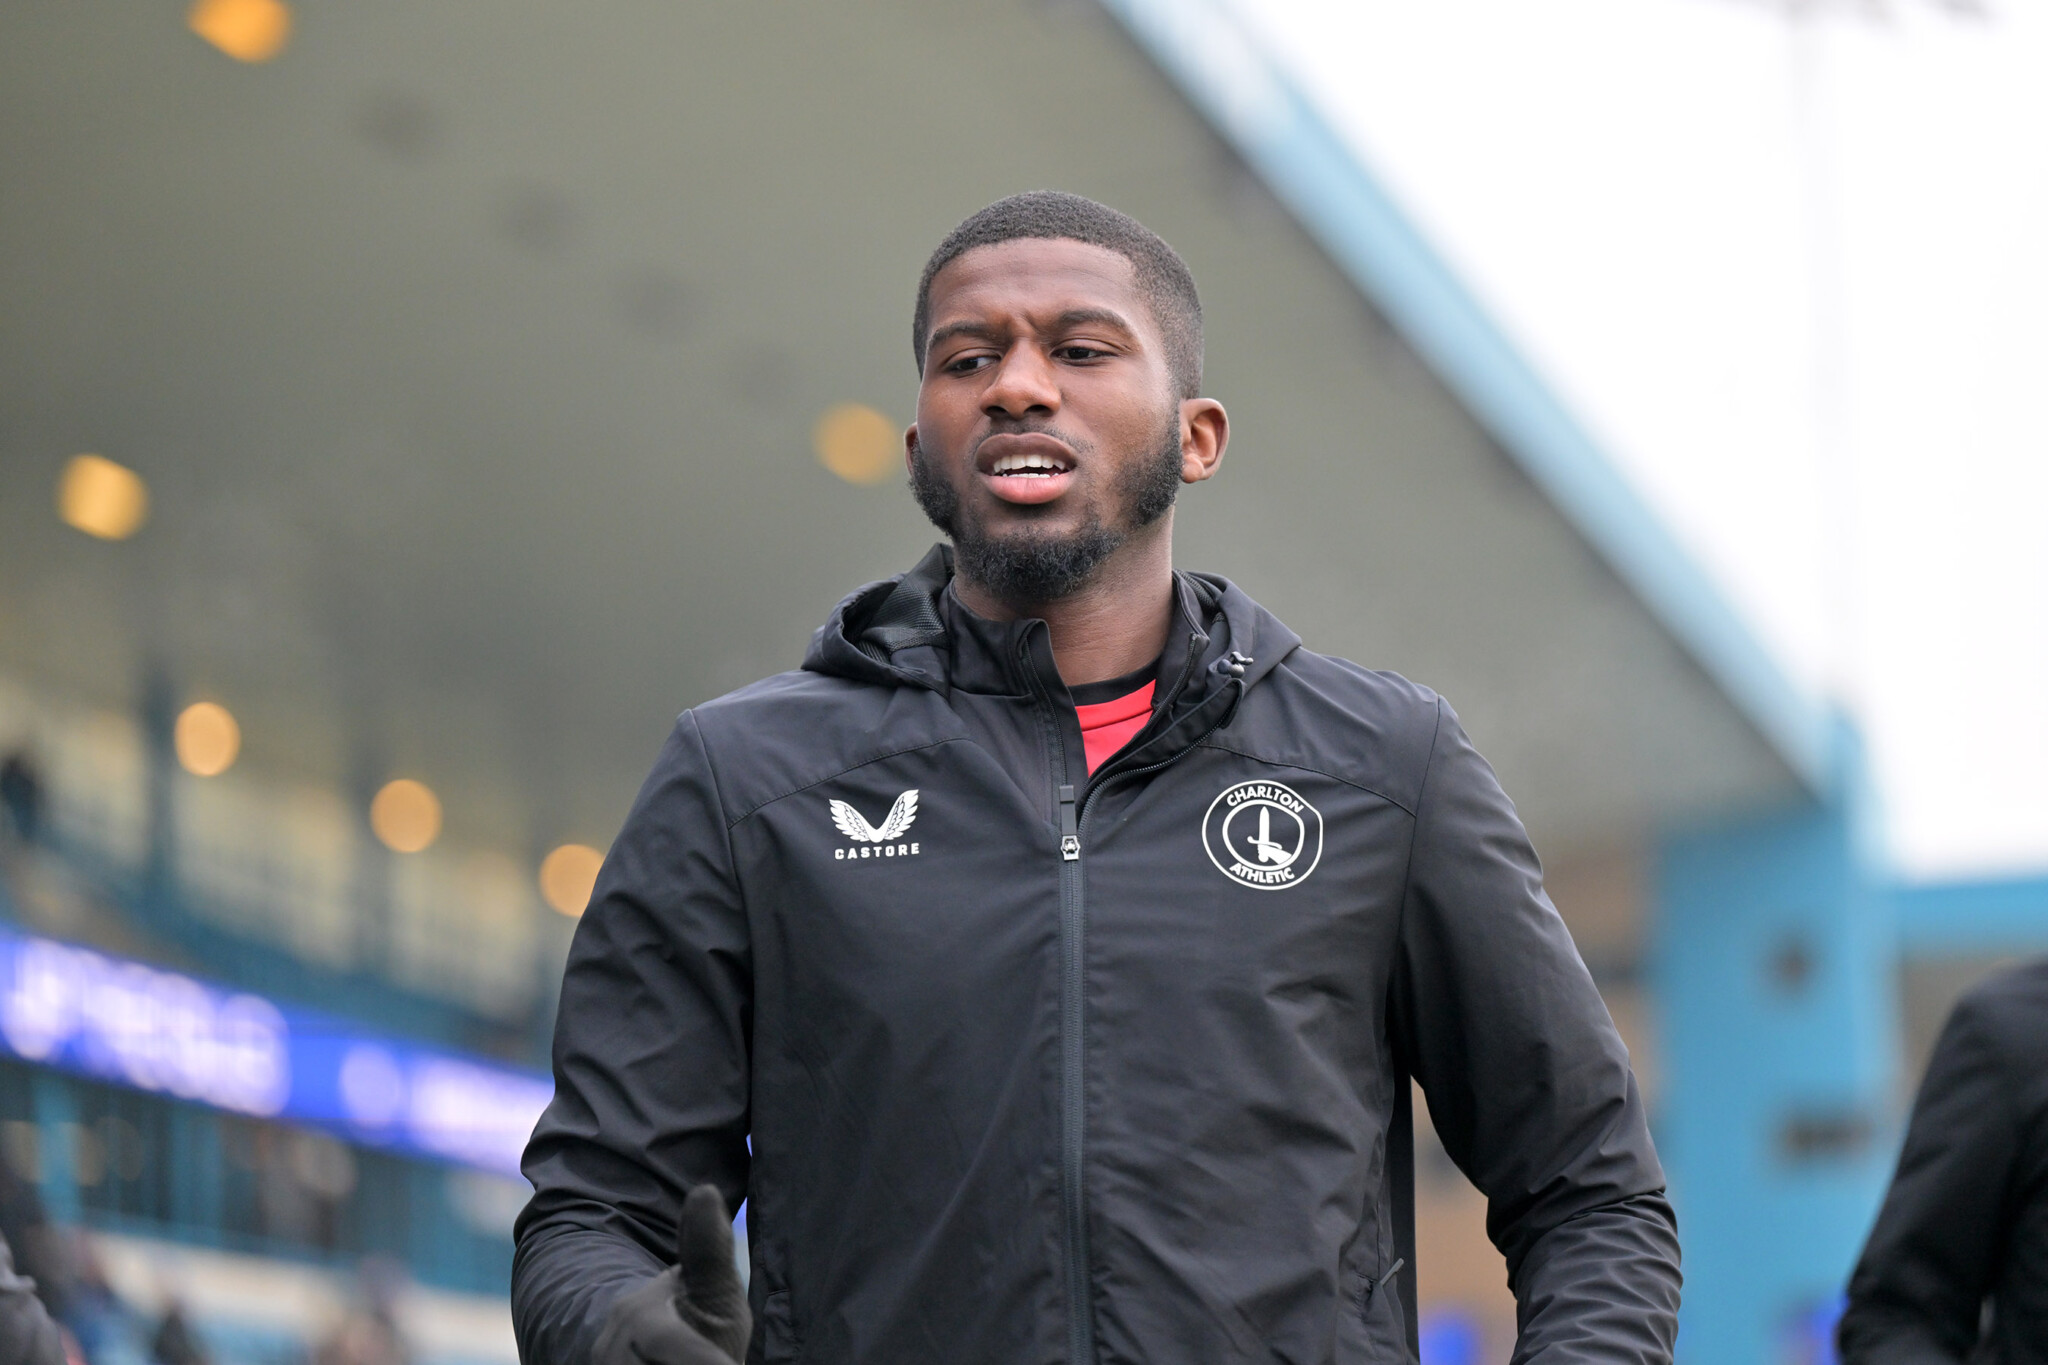 Charlton forward called up to Sierra Leone national team – South London News